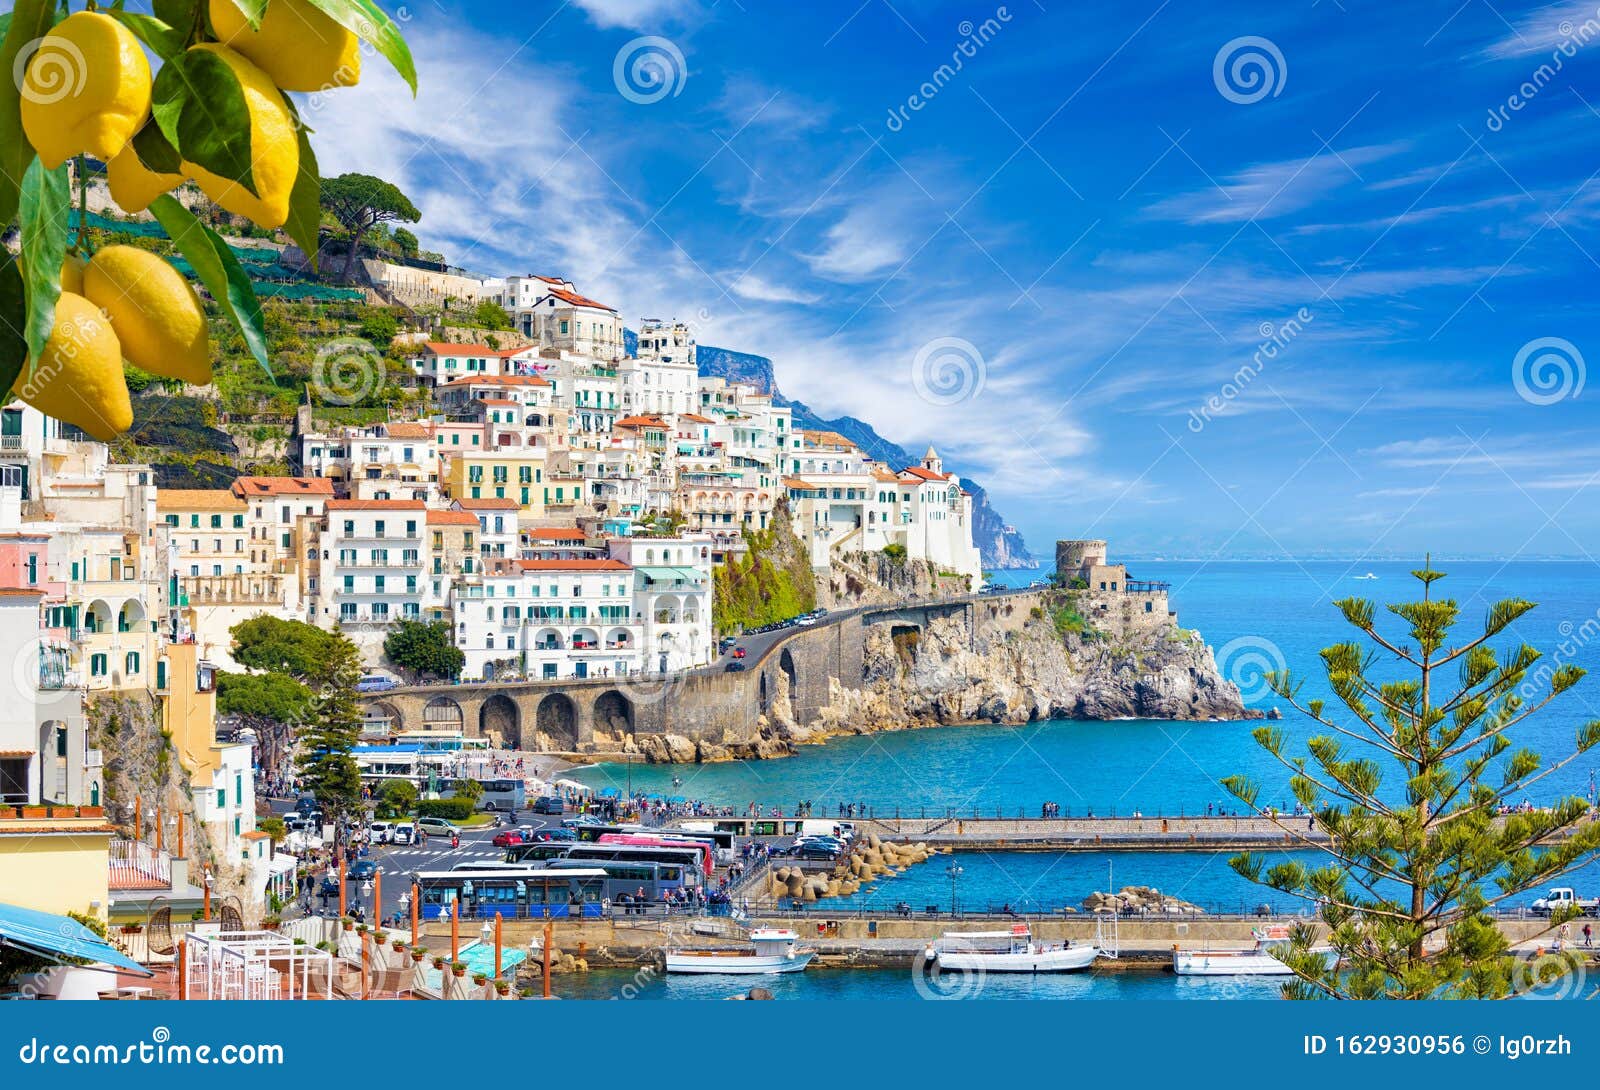 Beautiful Amalfi on Hills Down To Coast, Campania, Italy. Coast is Most Popular Travel Holiday Destination Stock Photo - Image of lemon, blue: 162930956